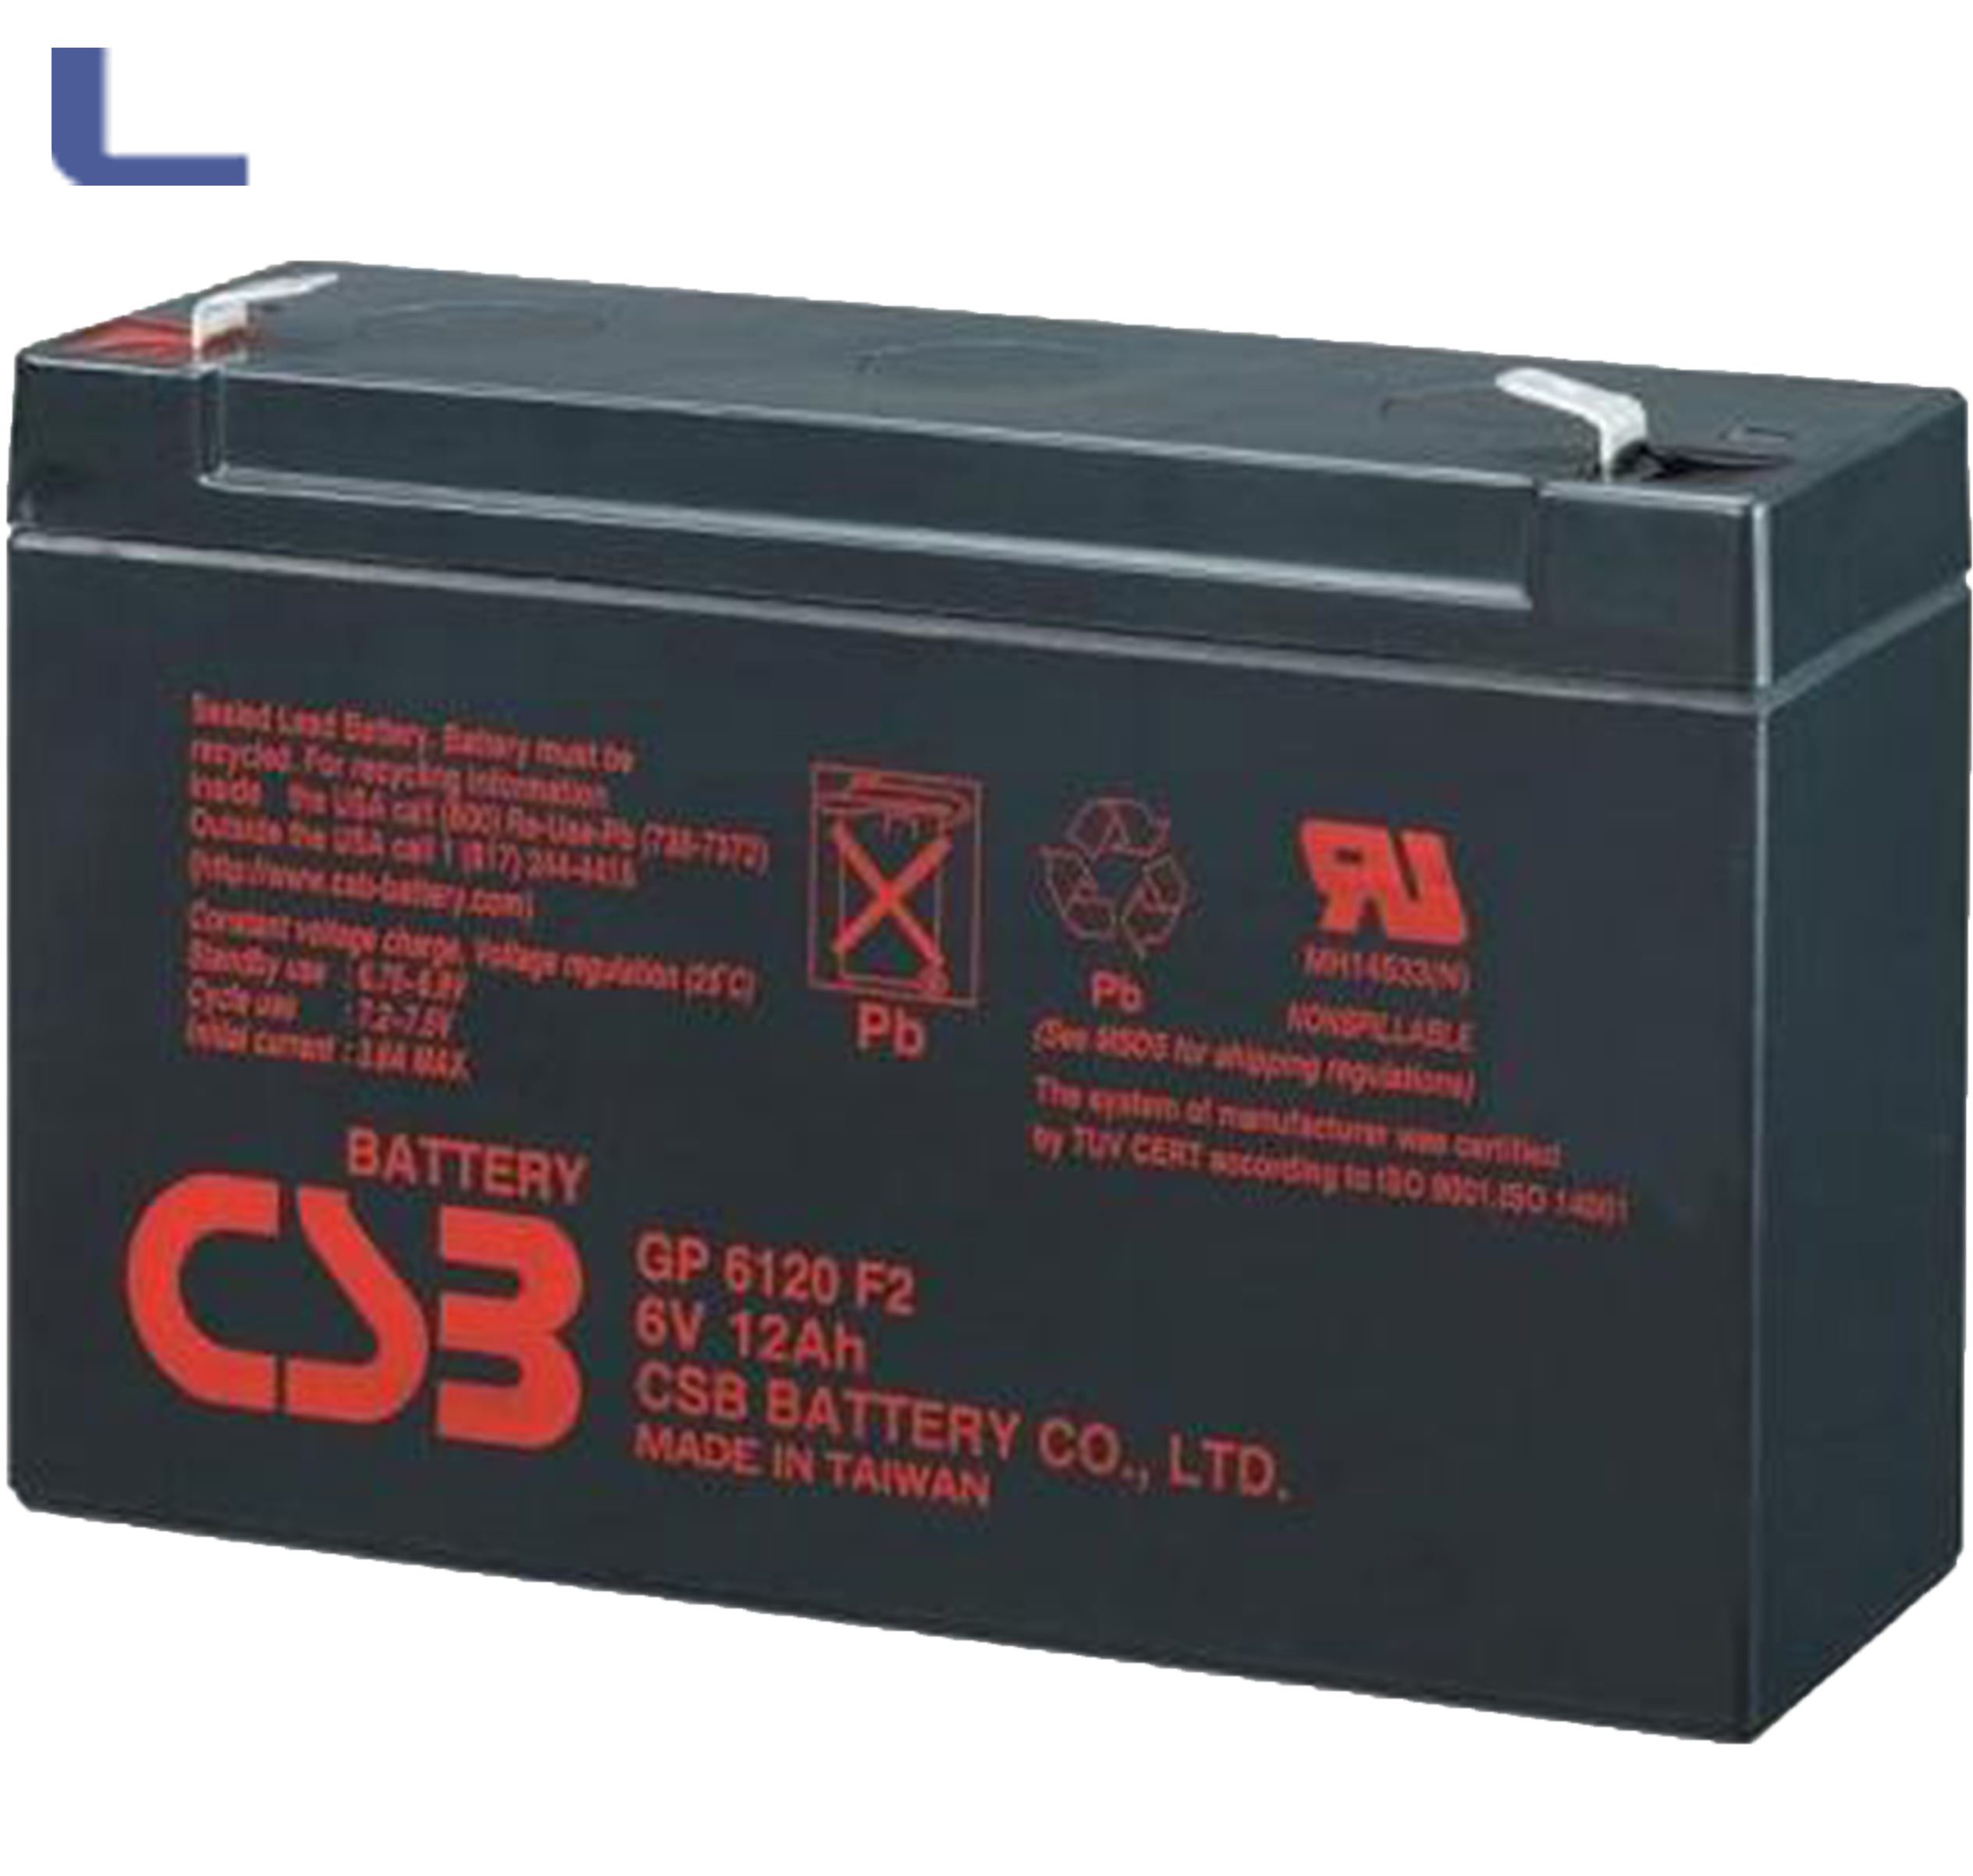 batteria al piombo 6v 12ah csb faston grande *329 - Batterie